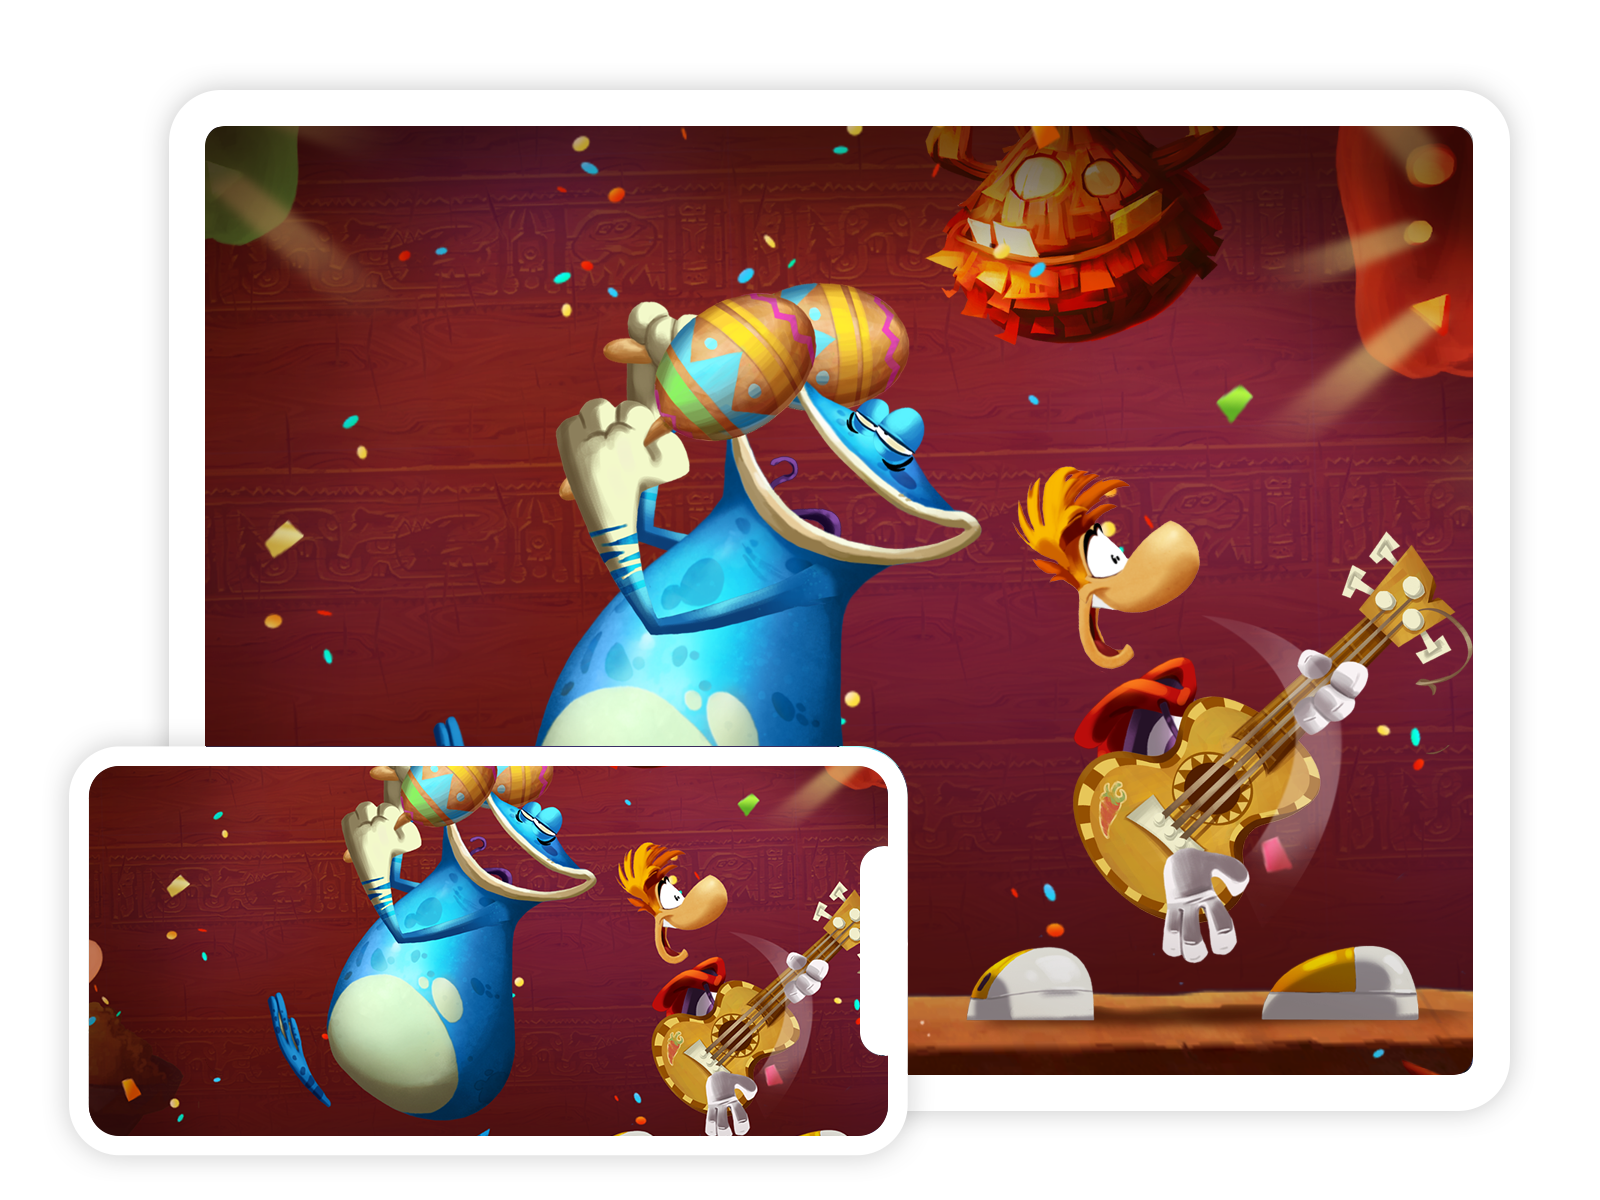 Rayman Jungle Run - Apps on Google Play